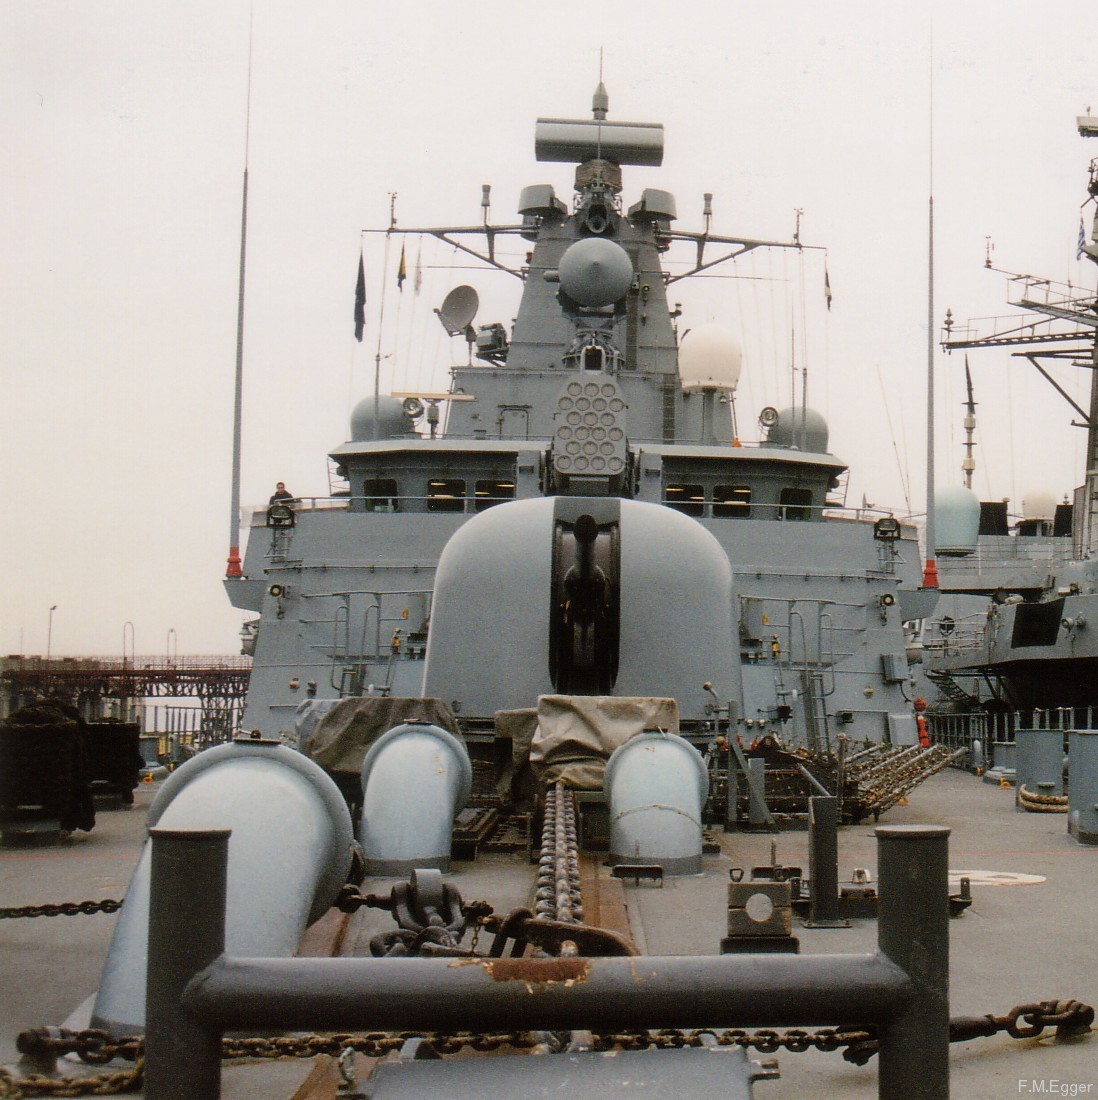 f-216 fgs schleswig holstein type 123 class frigate german navy nato stanavformed snfm trieste italy 2003 27